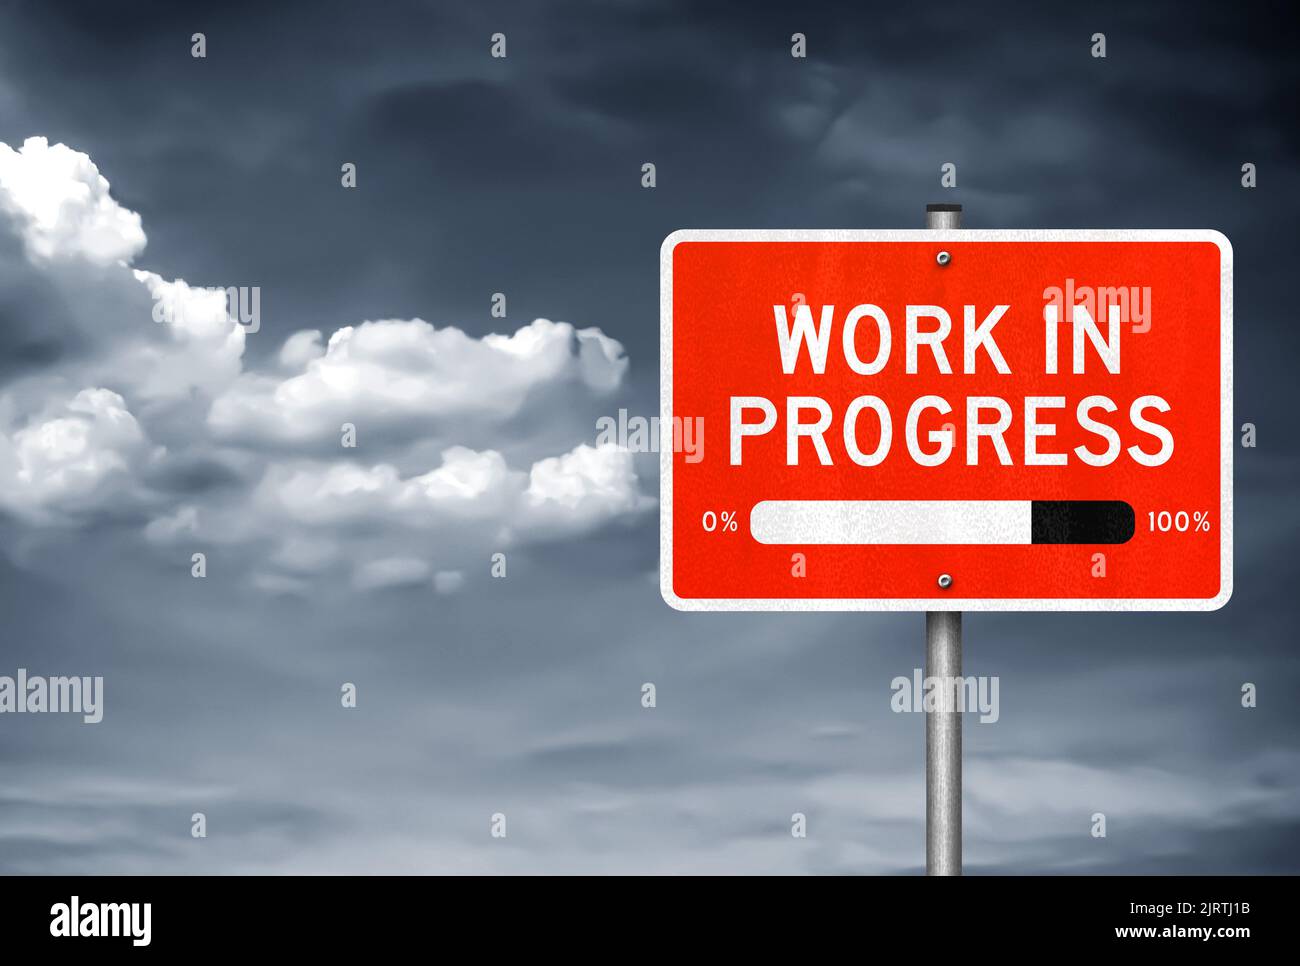 Work in progress - roadsign message Stock Photo